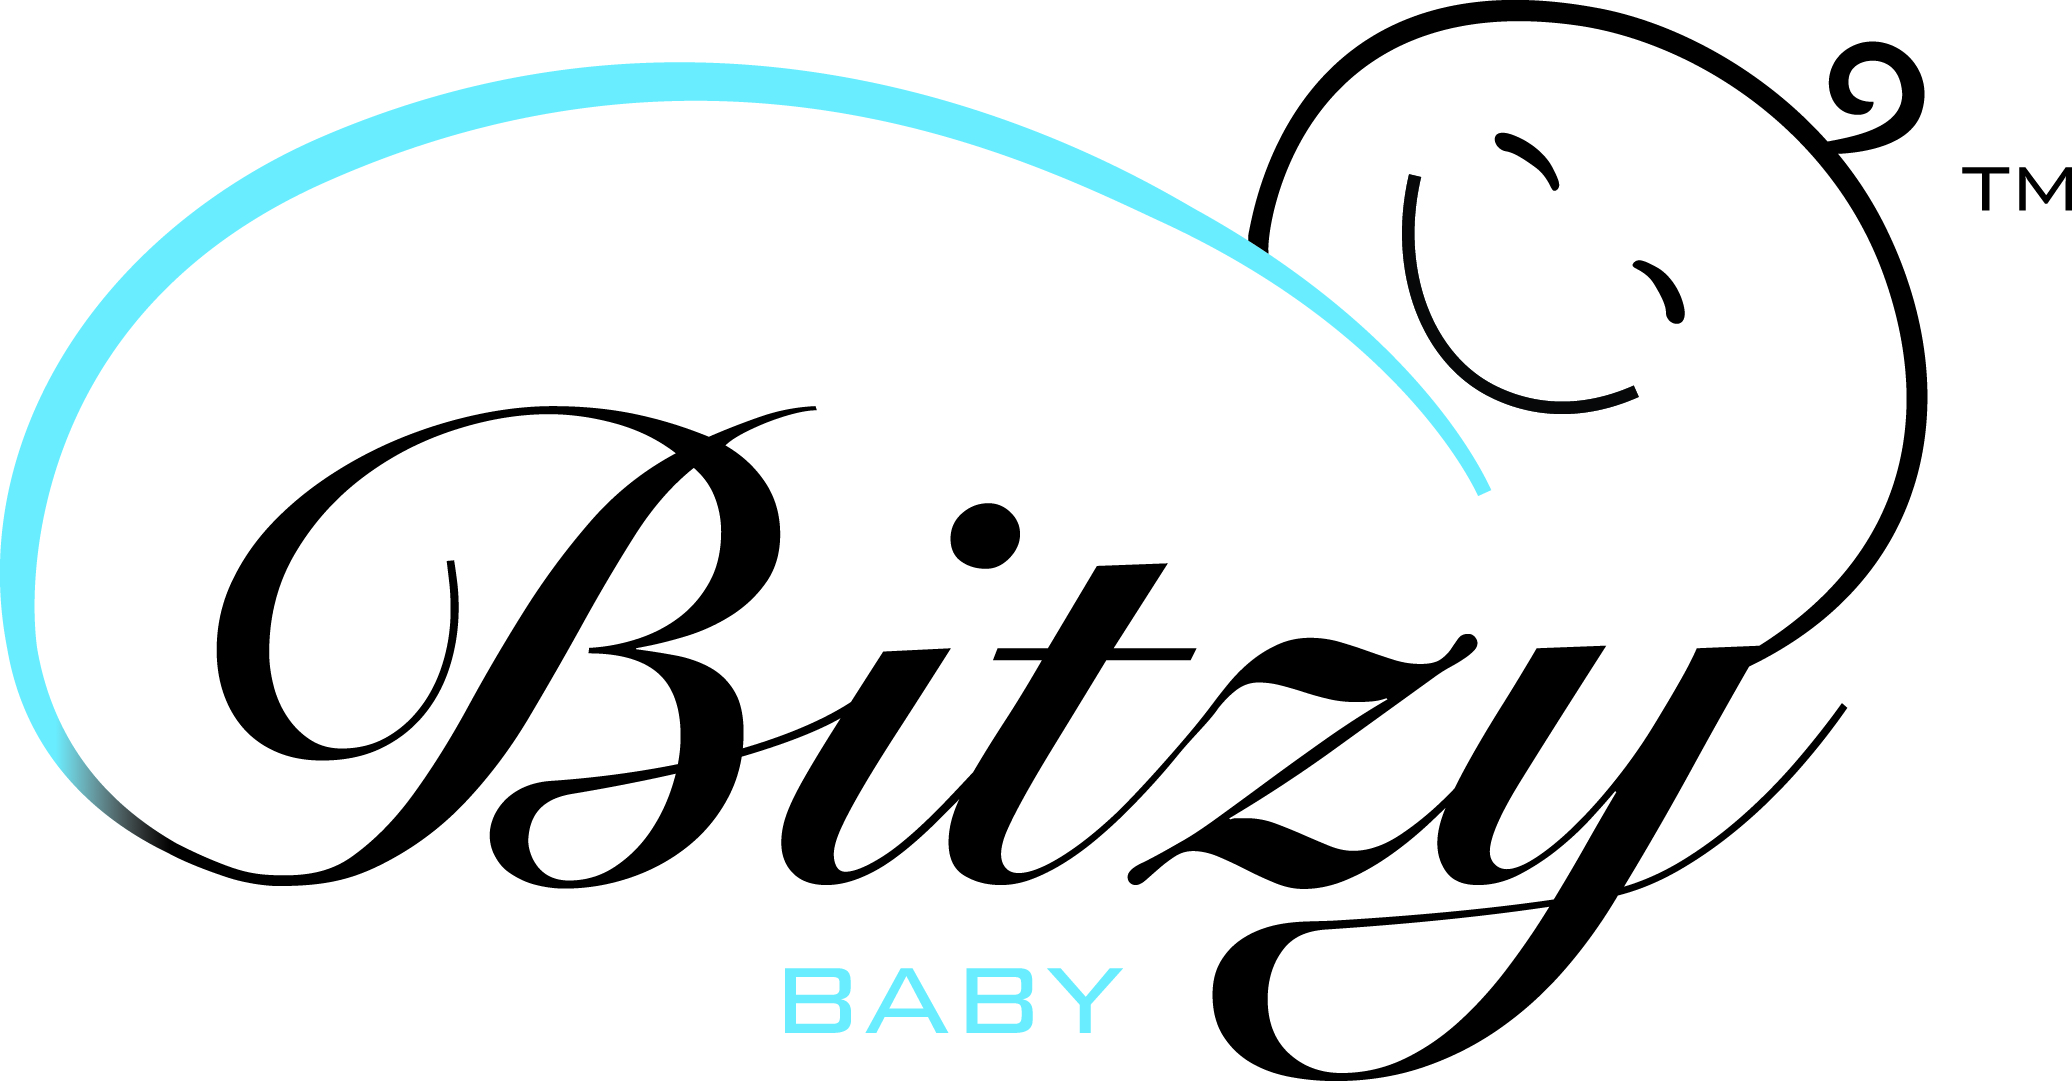 Bitzy Baby logo.jpg